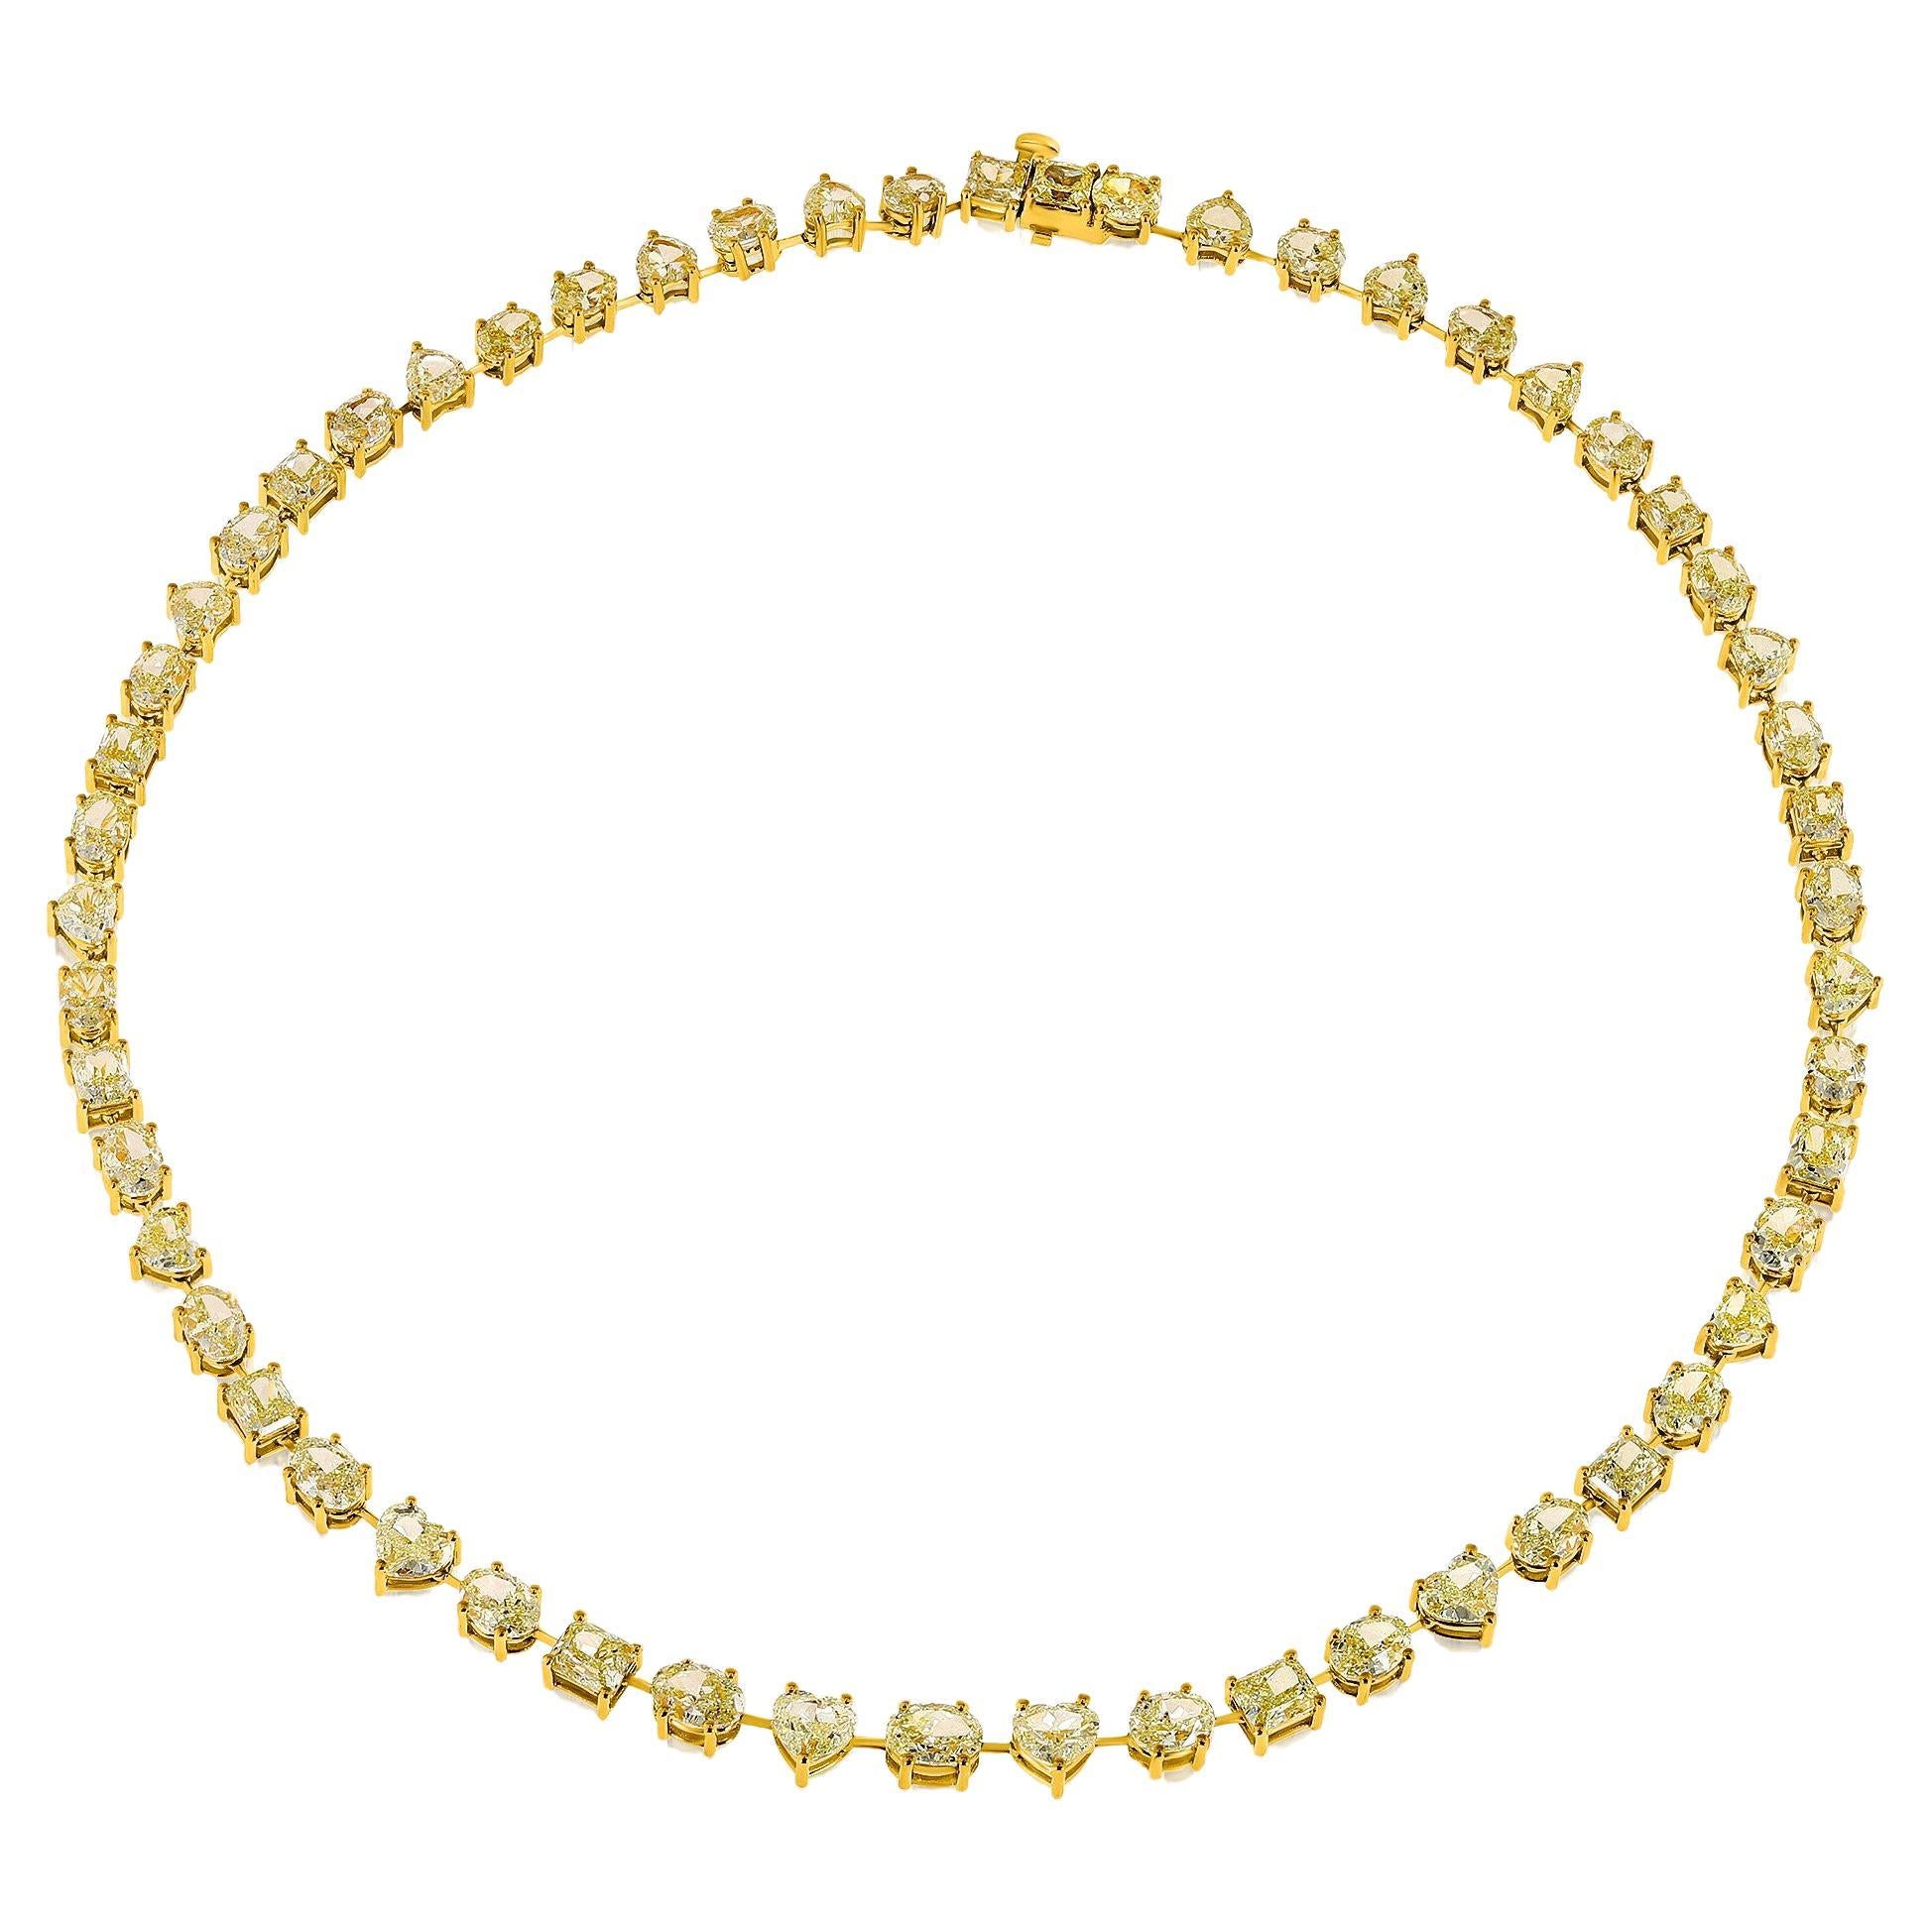 30 Carat Natural Mix Shaped Yellow Diamond Necklace, In 18 Karat Yellow Gold.